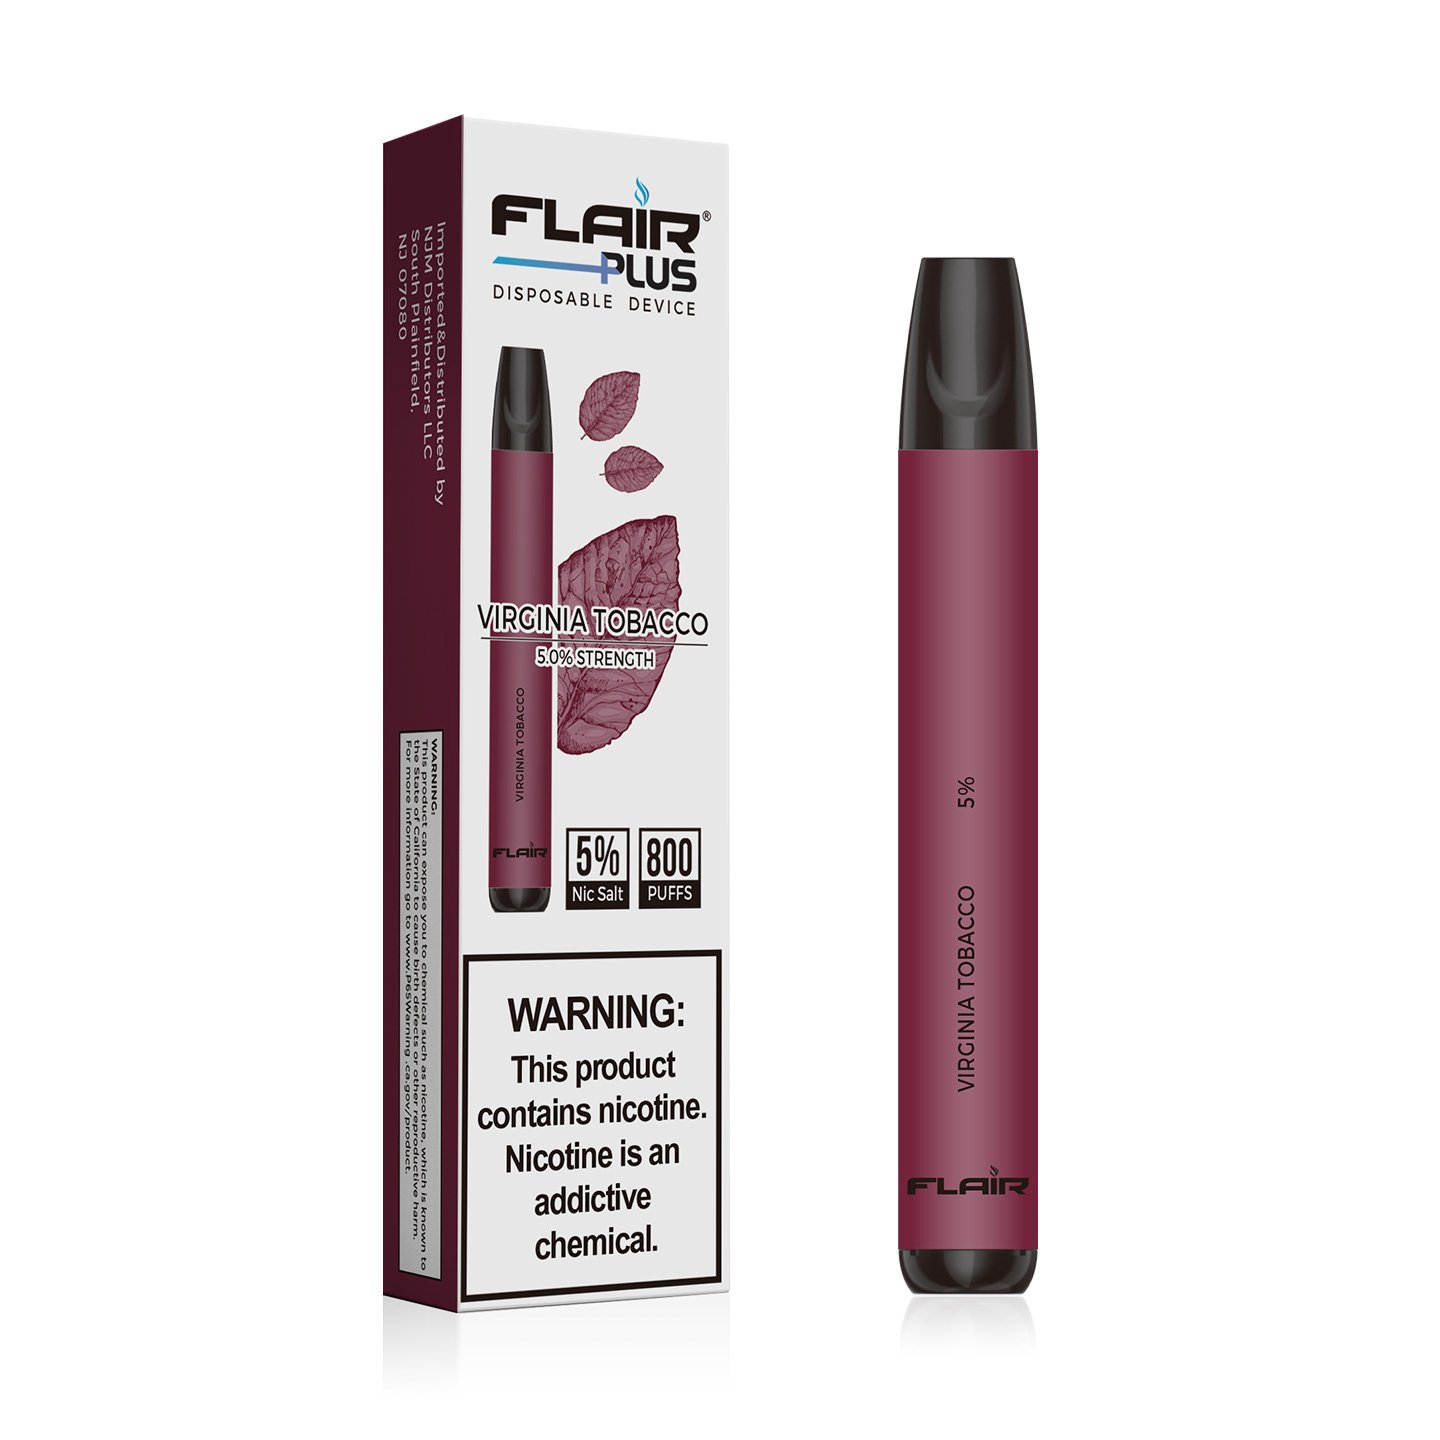 Flair Plus Disposable Devices (Virginia Tobacco - 800 Puffs)